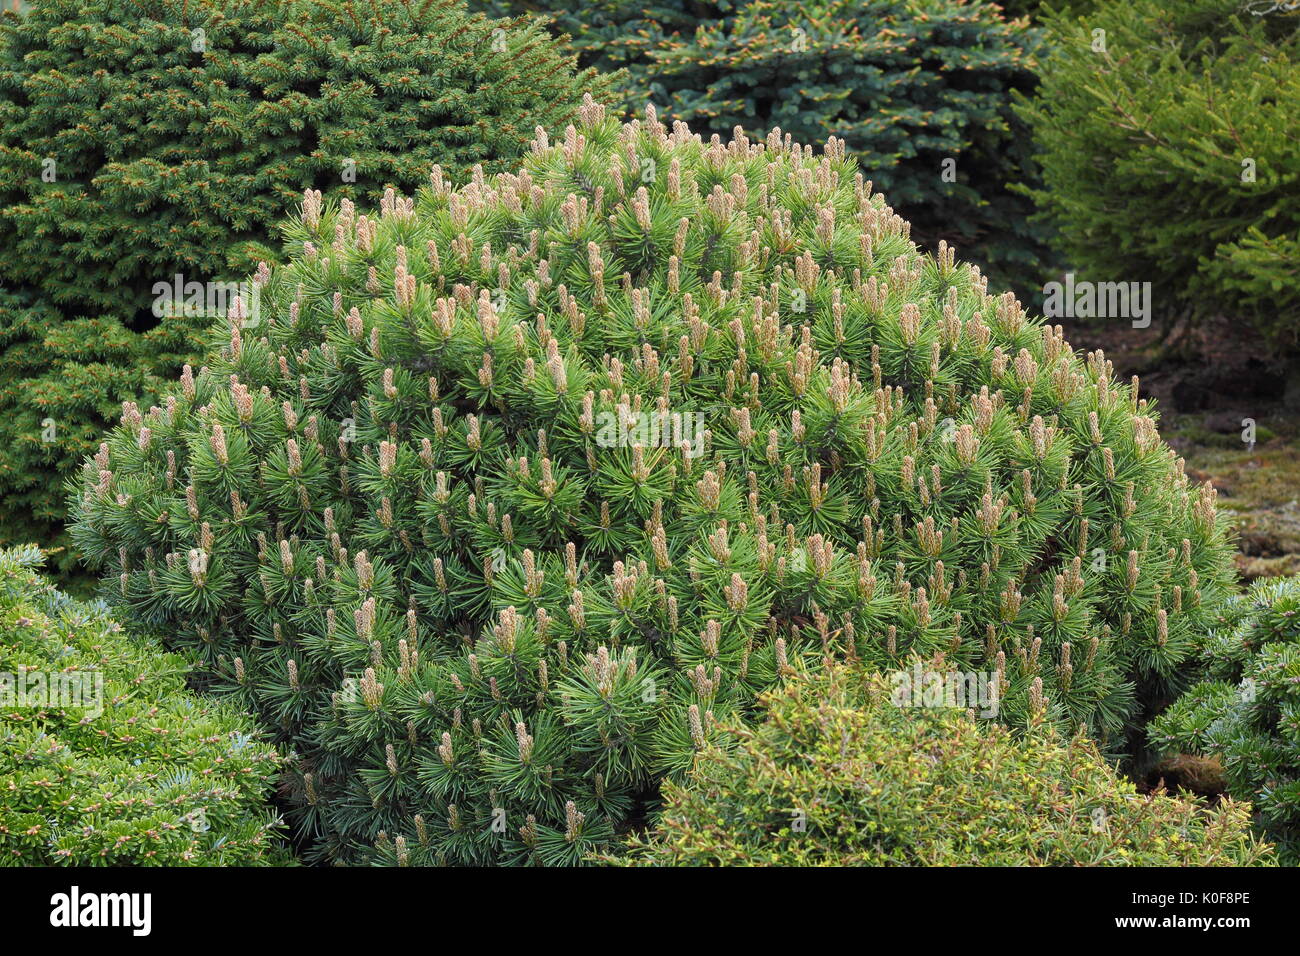 Dwarf Mountain Pine (Pinus mugo) var. "Piggelmee', con forma de globo terráqueo un pino enano, en un jardín DEL REINO UNIDO Foto de stock